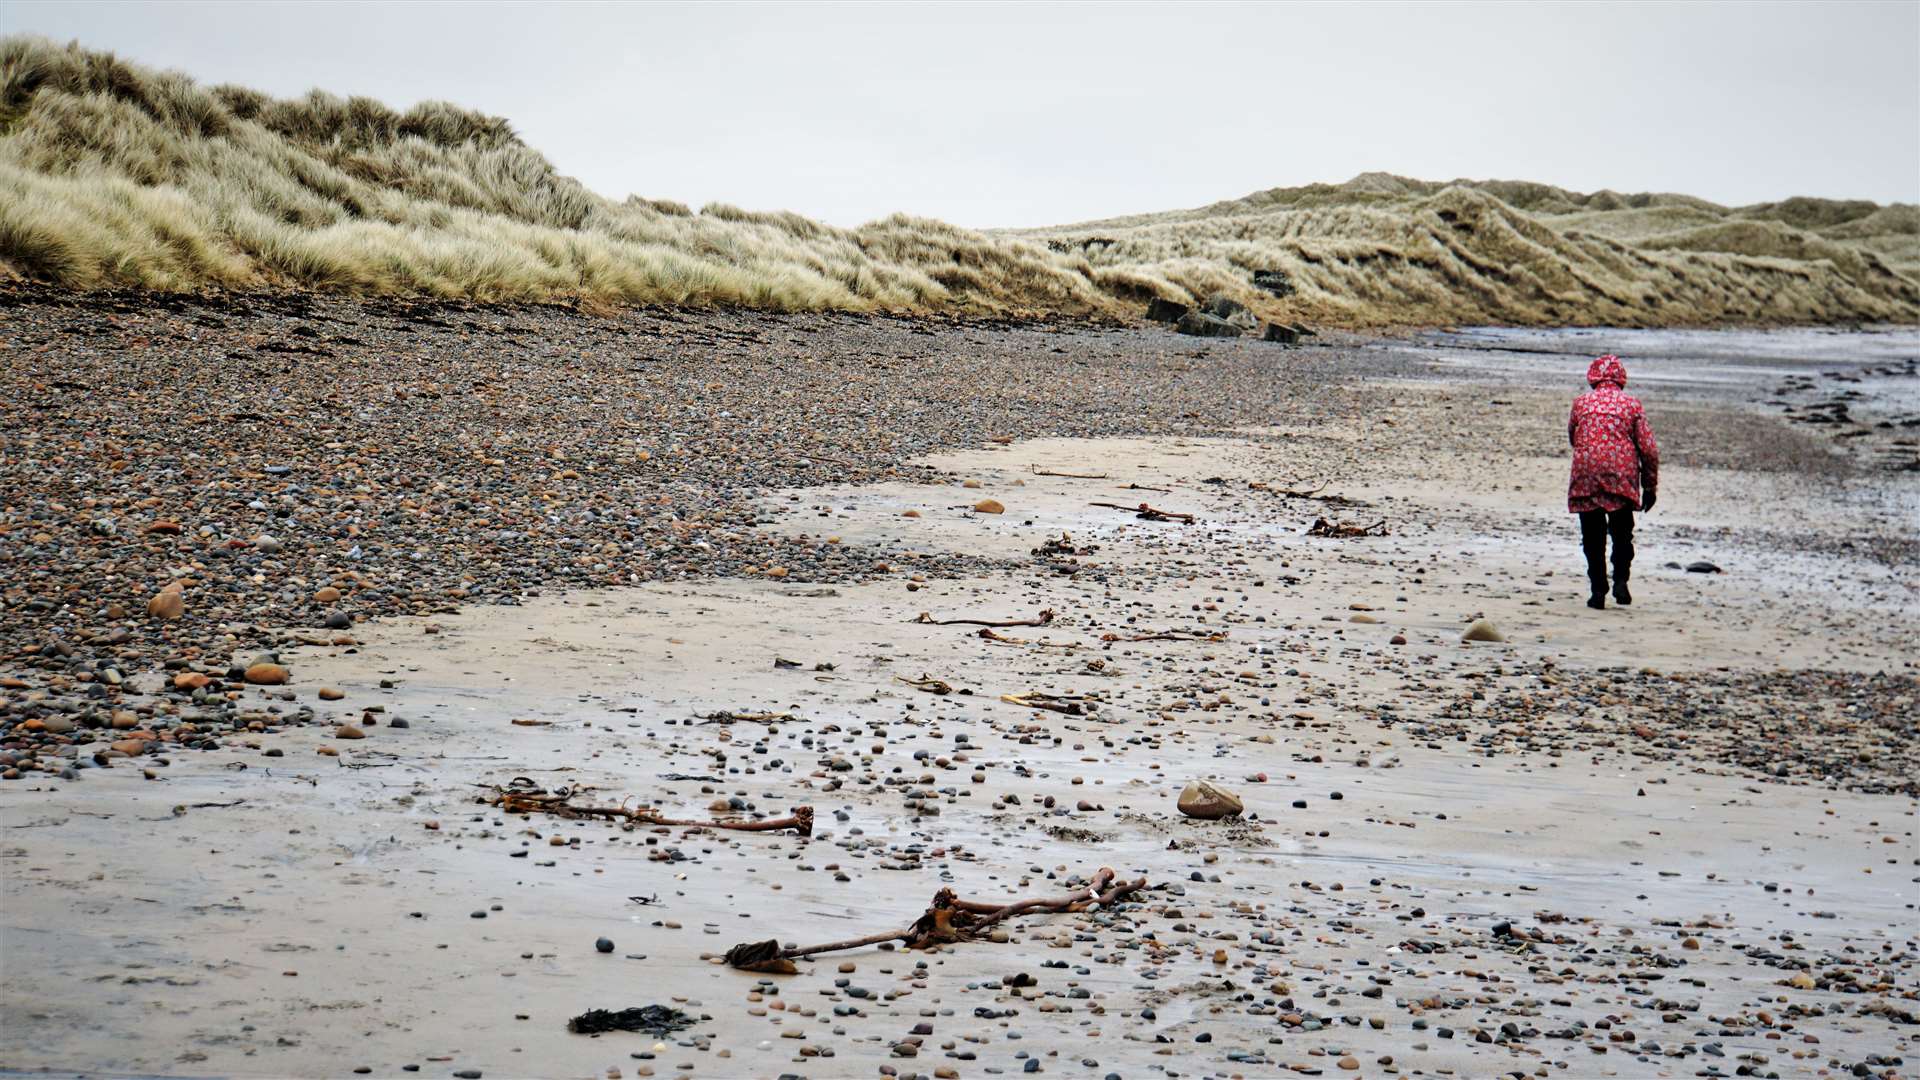 Dune restoration work has been undertaken at Dunnet beach. Picture: DGS